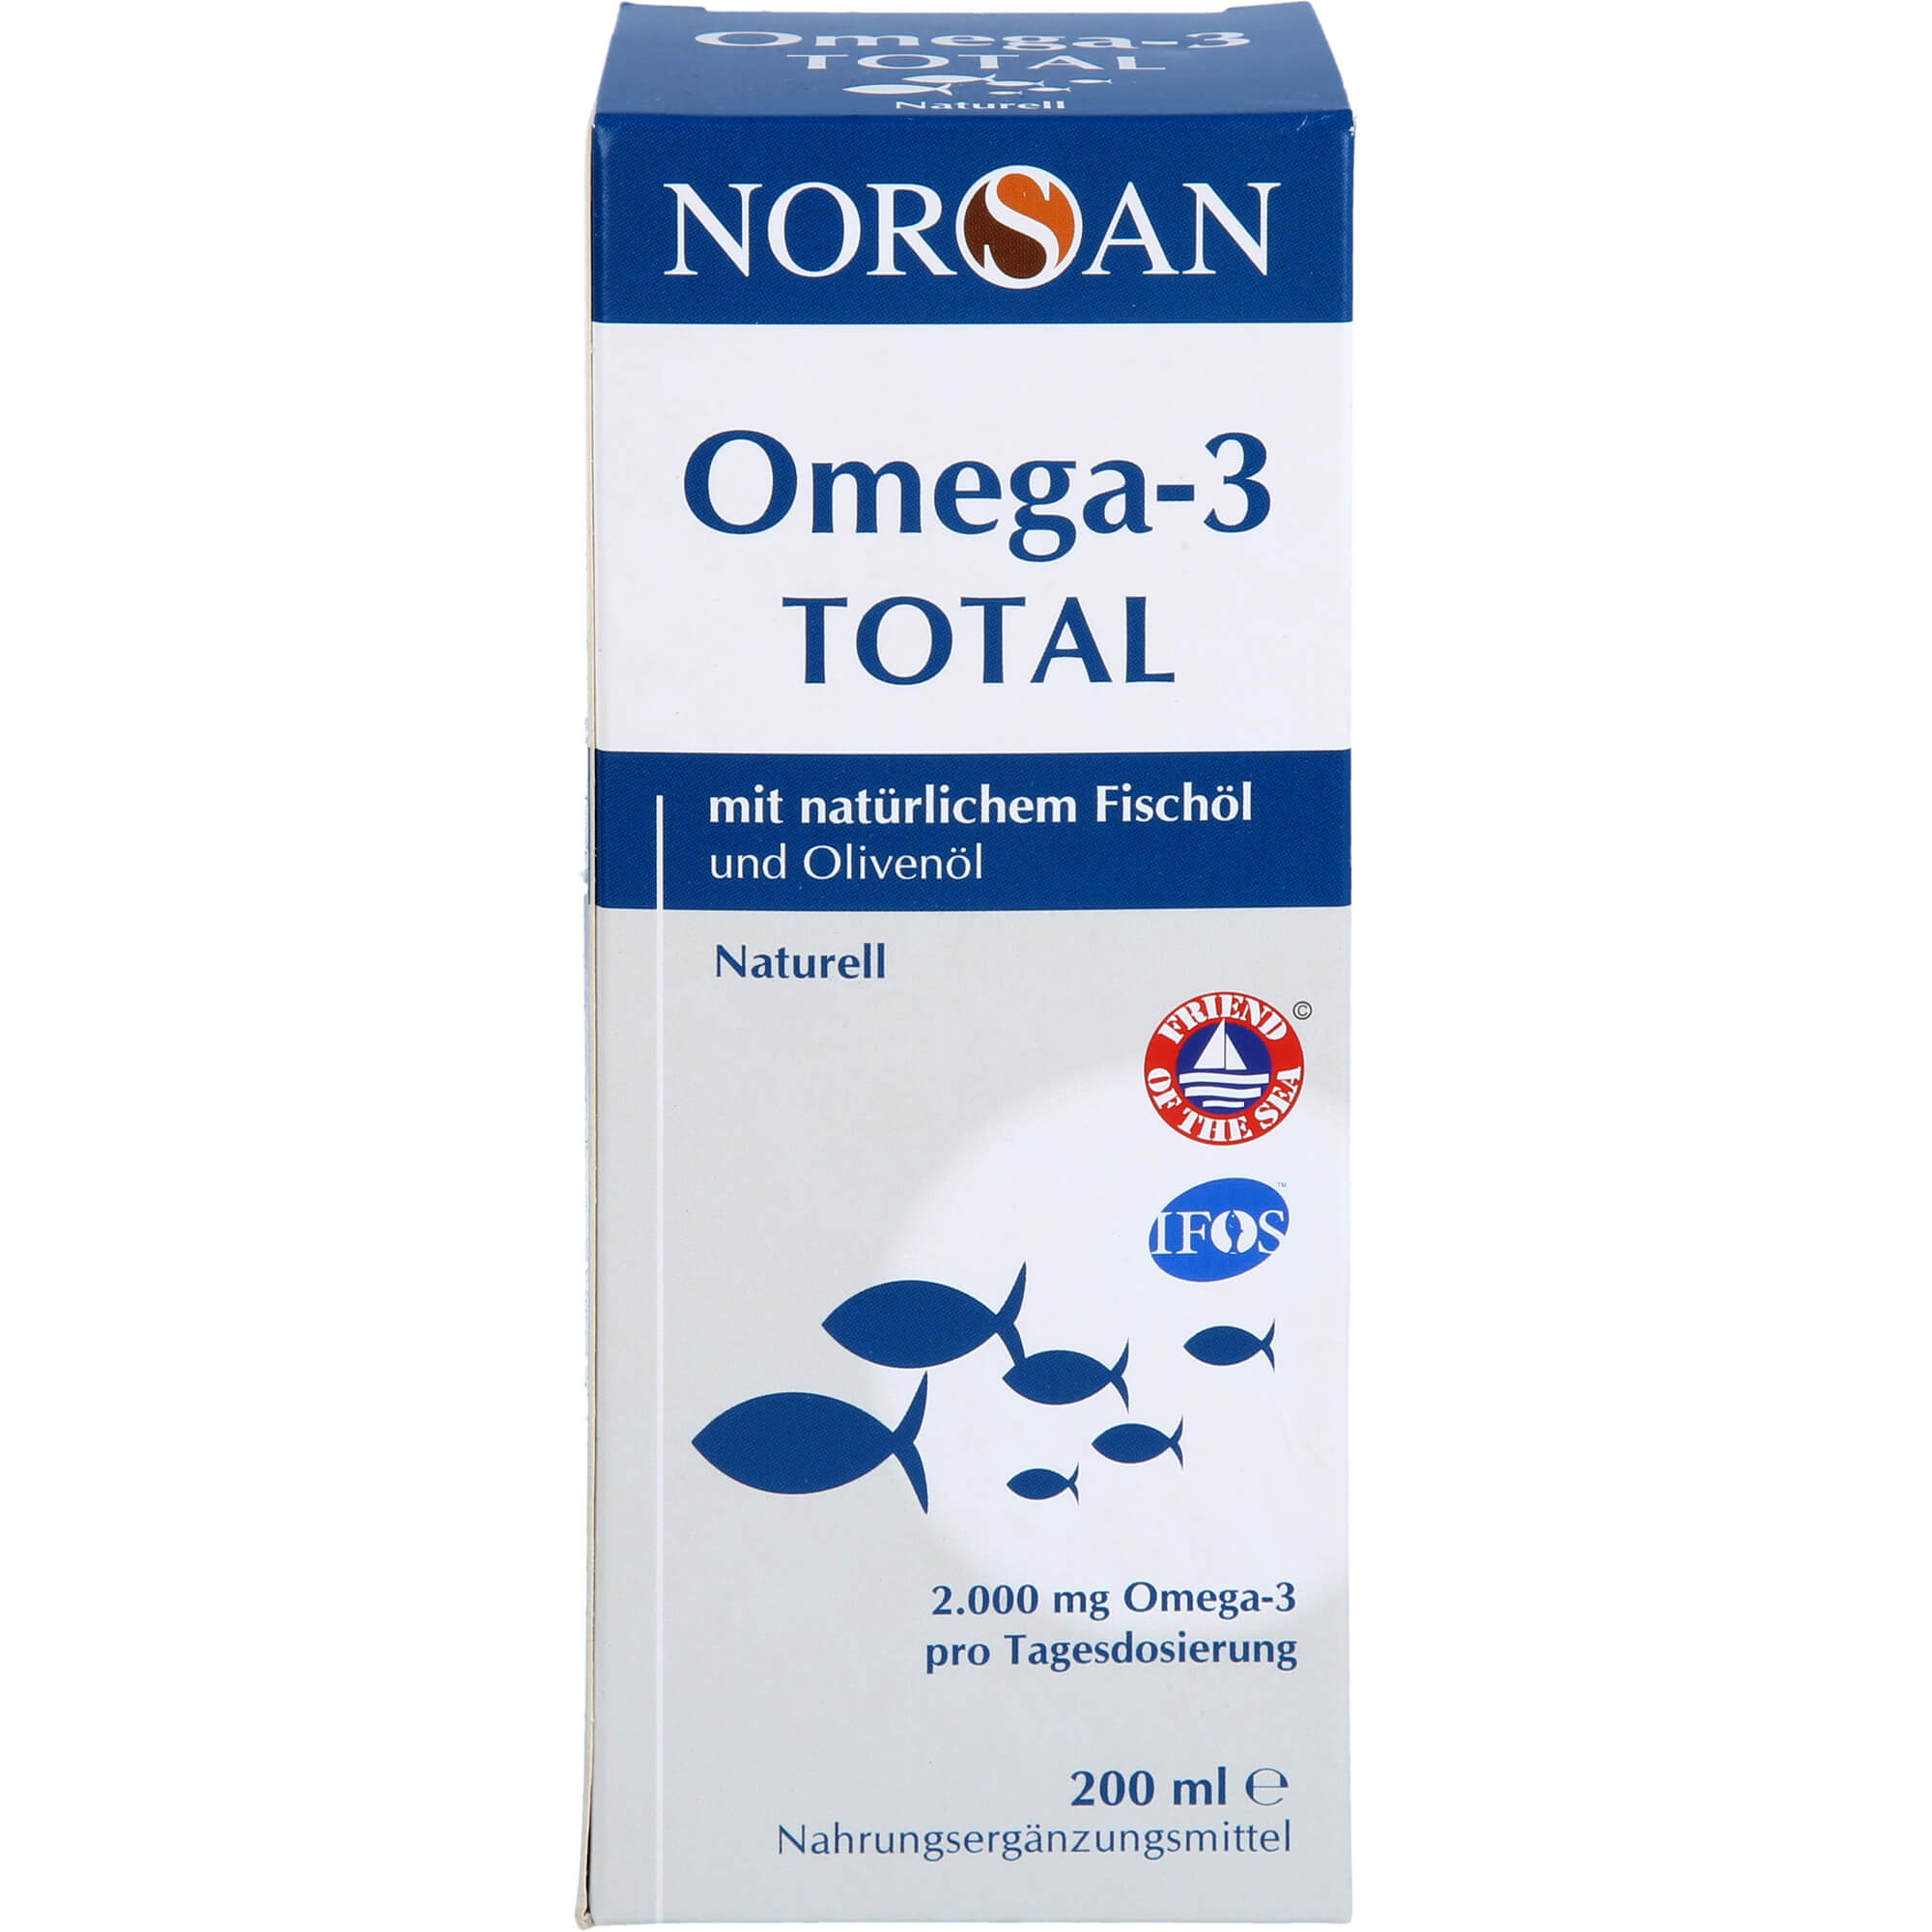 NORSAN Omega-3 Total Naturell flüssig